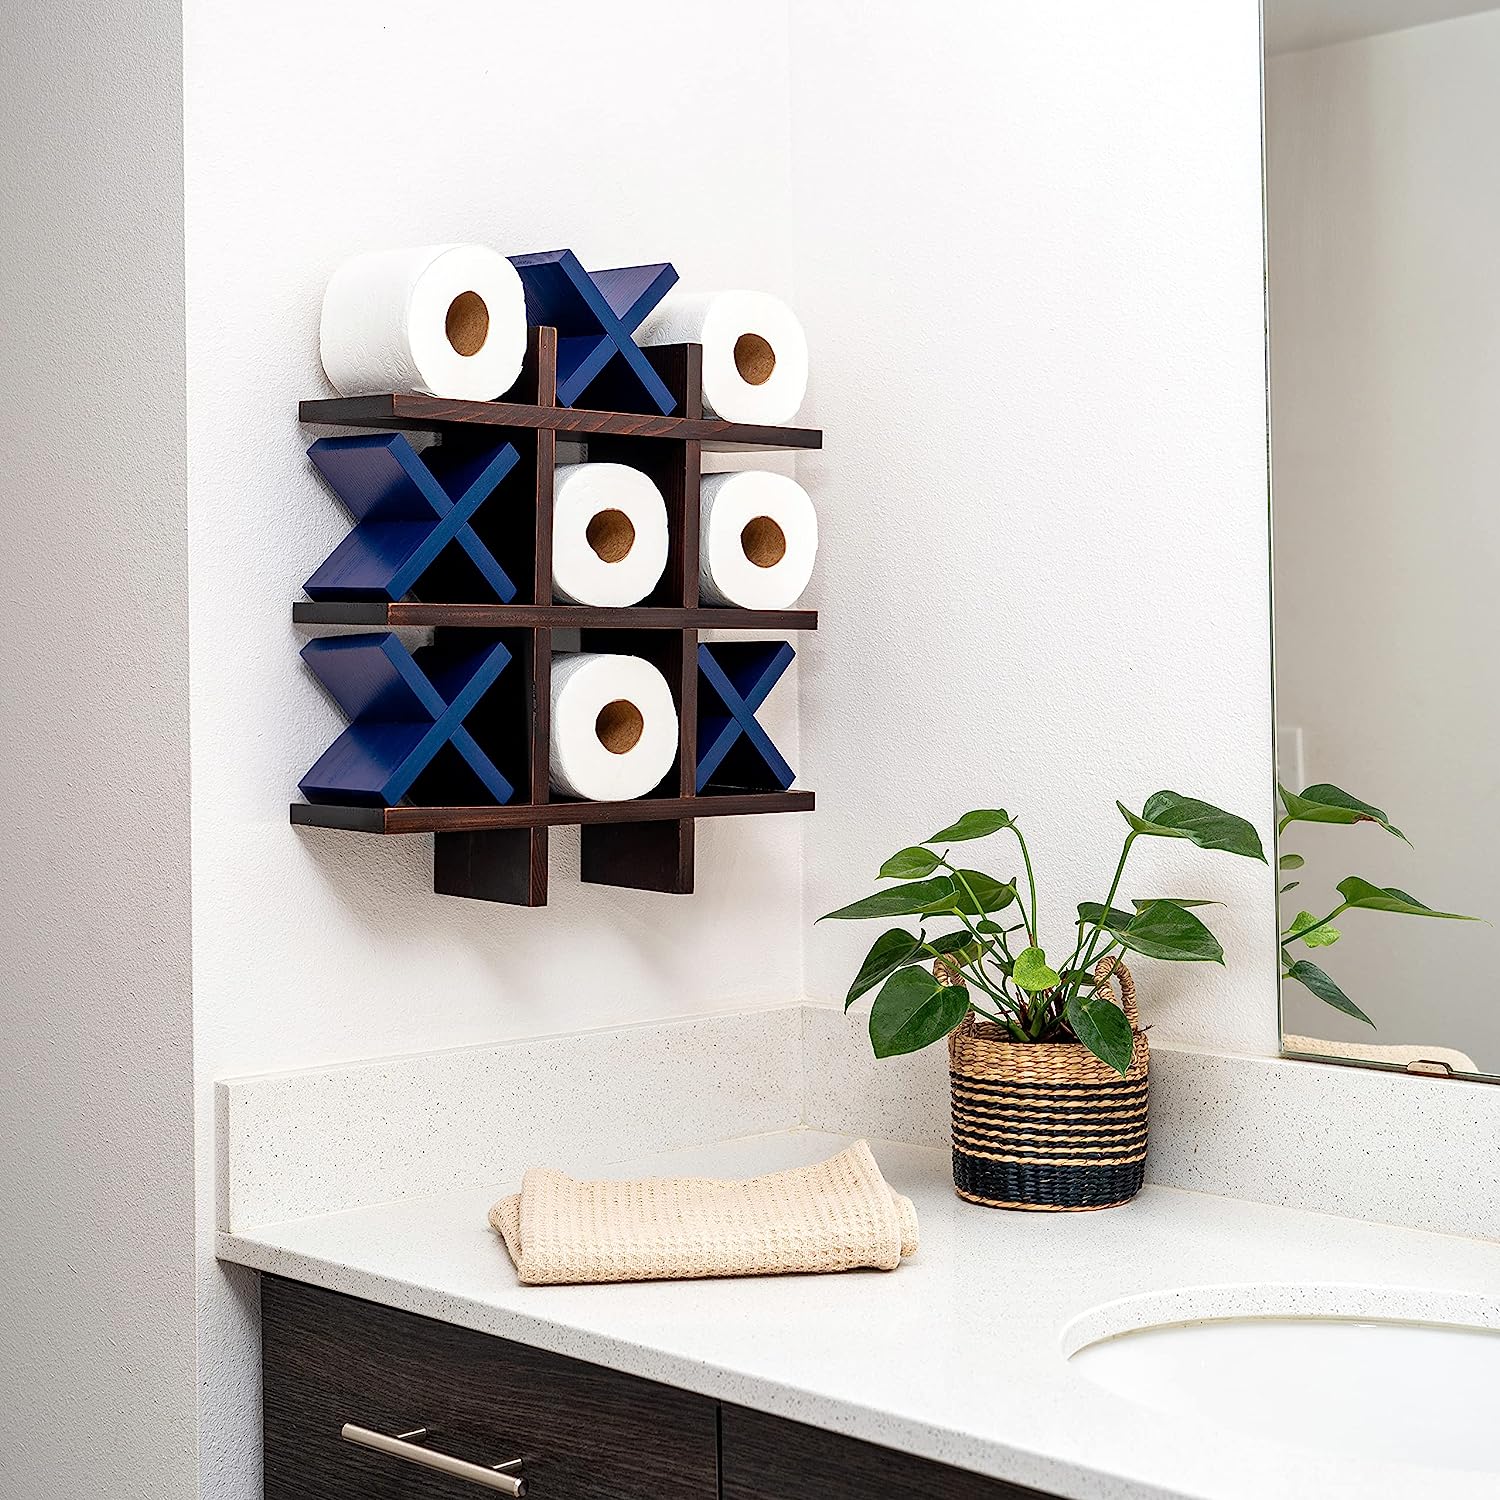 10 UNIQUE Toilet Paper Holder Designs That Your Bathroom Will